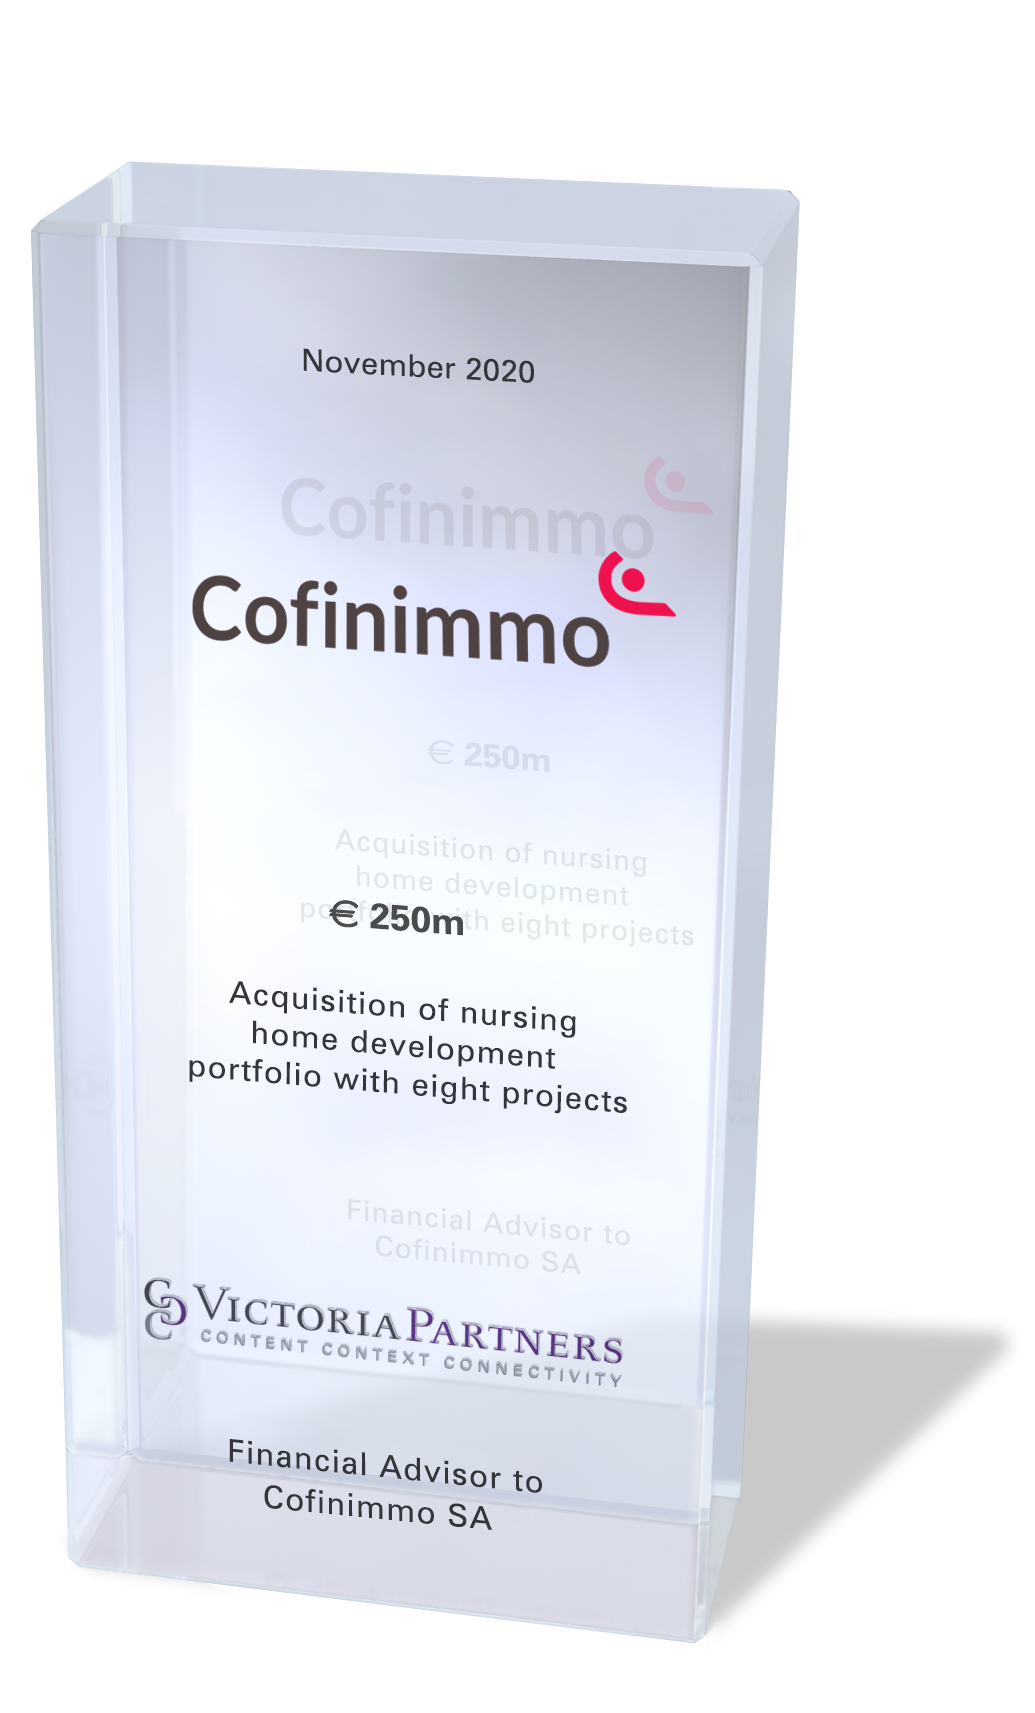 VICTORIAPARTNERS - Financial Advisor to Cofinimmo SA - November 2020